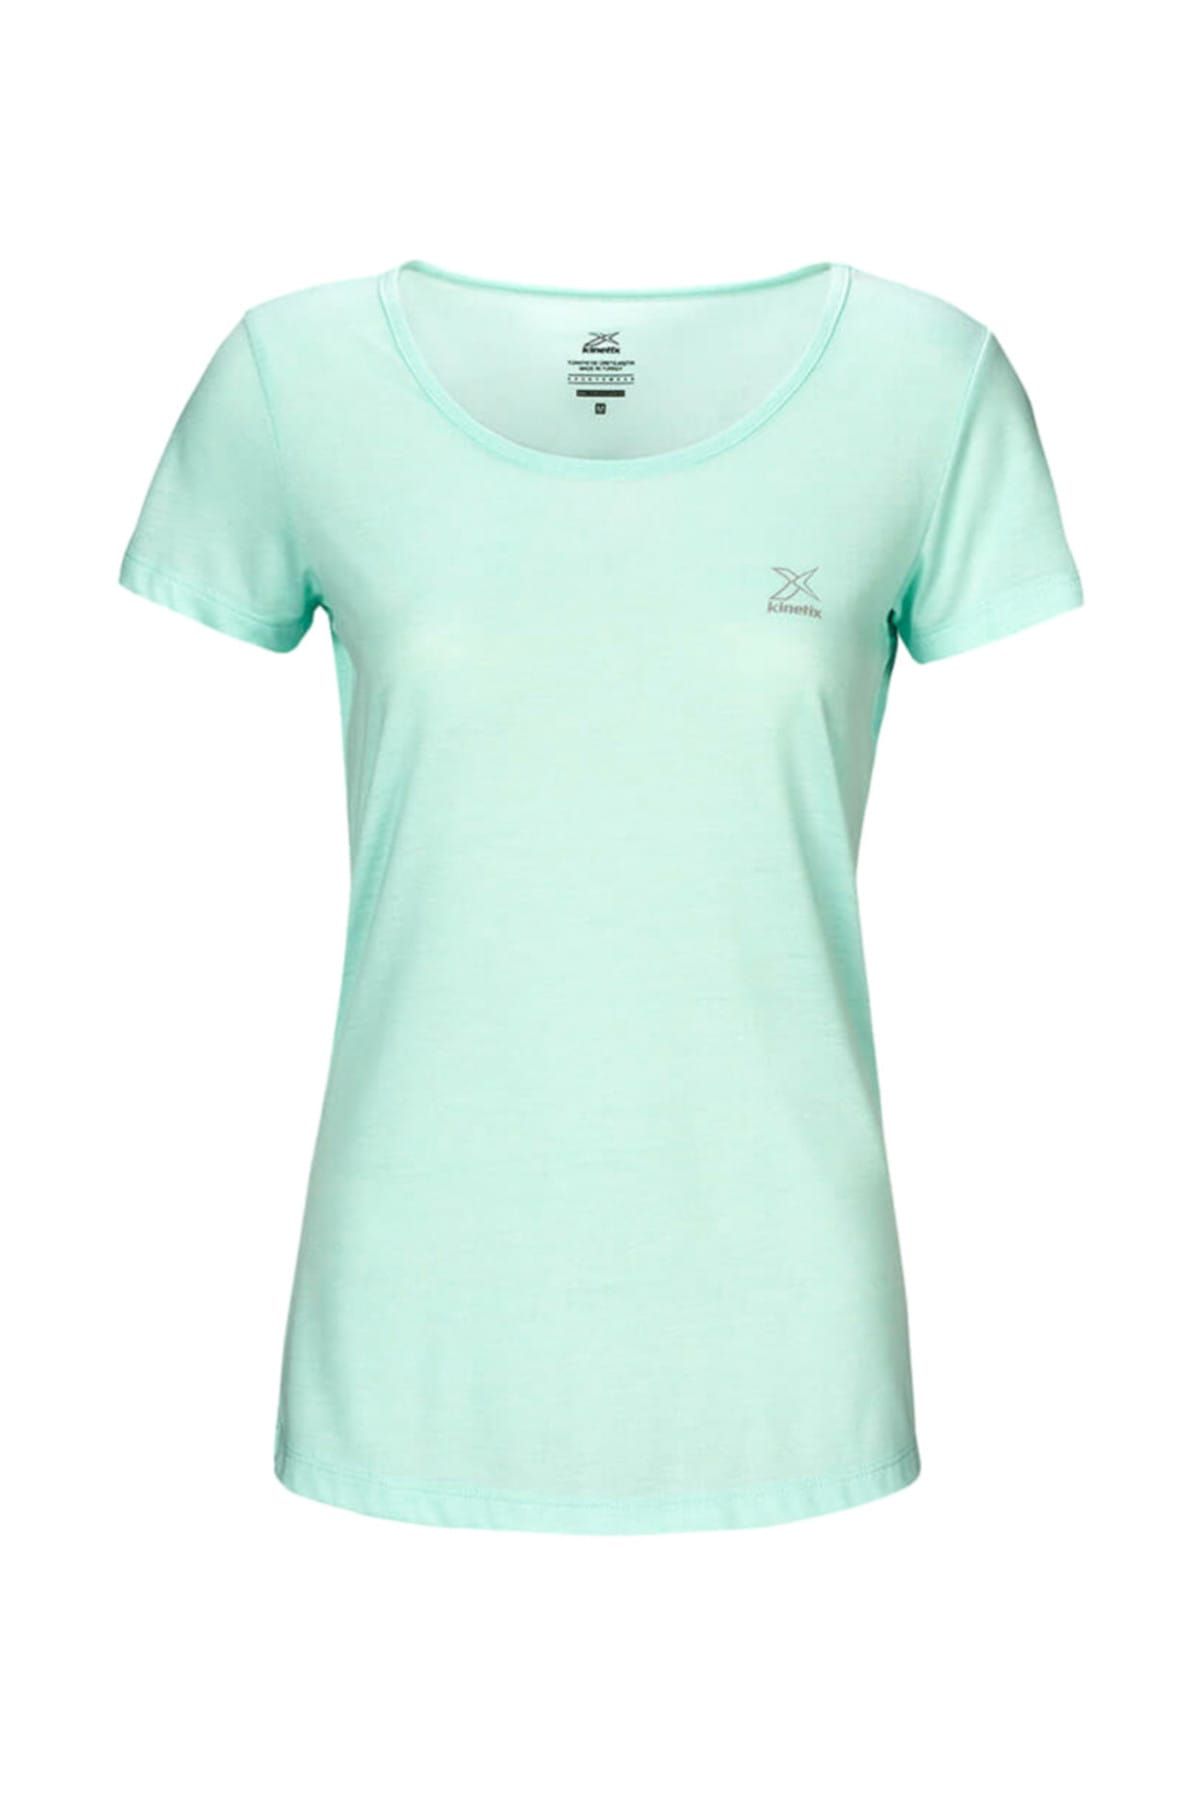 Kinetix BASIC T-SHIRT Mint Kadın T-Shirt 100380869